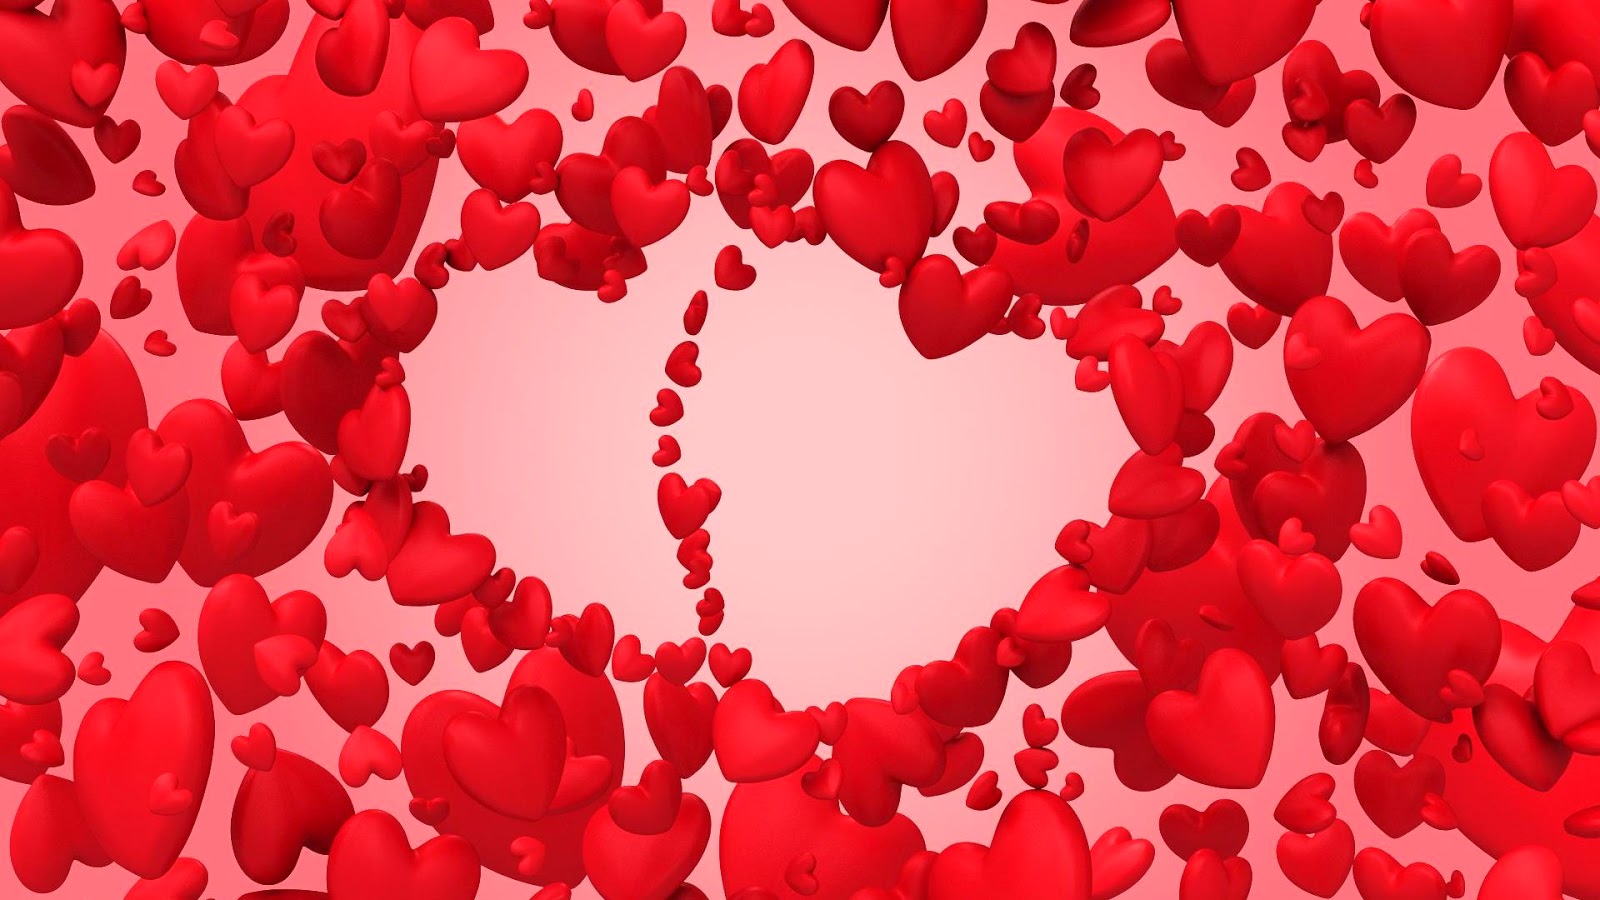 Love Heart HD Wallpaper Lovely Hearts Image